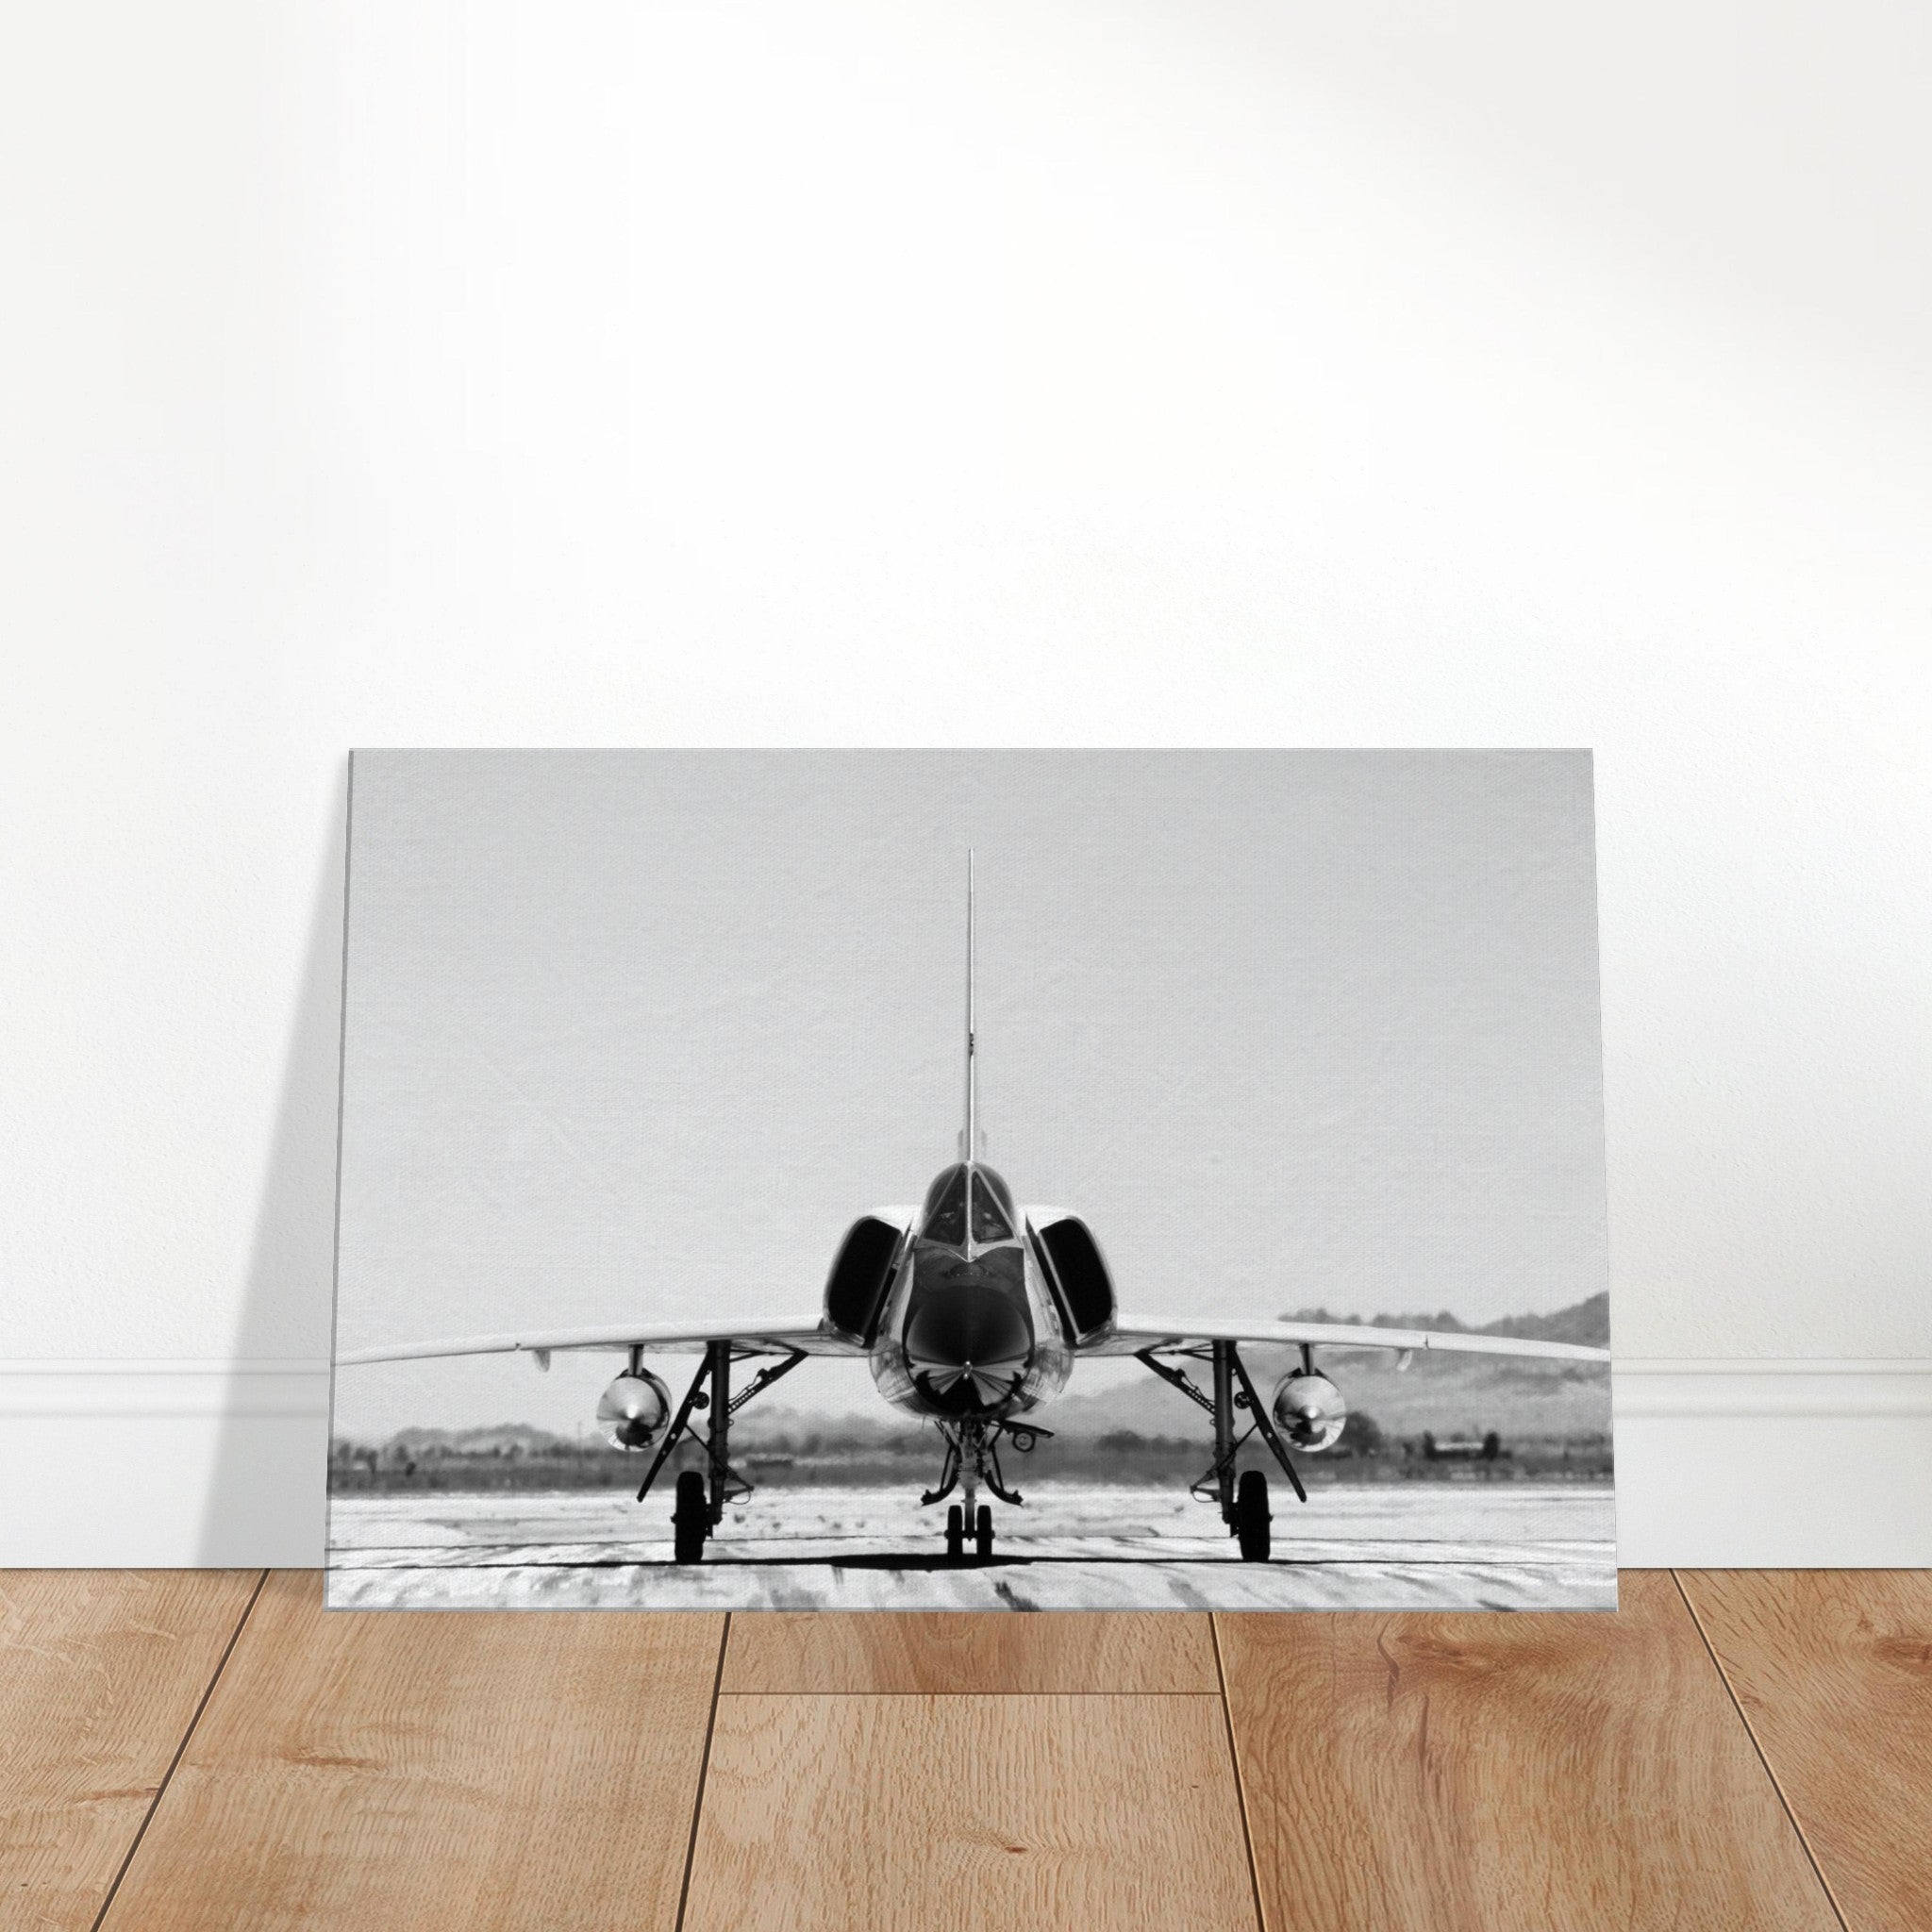 F-106 "Delta Dart" on Canvas - I Love a Hangar